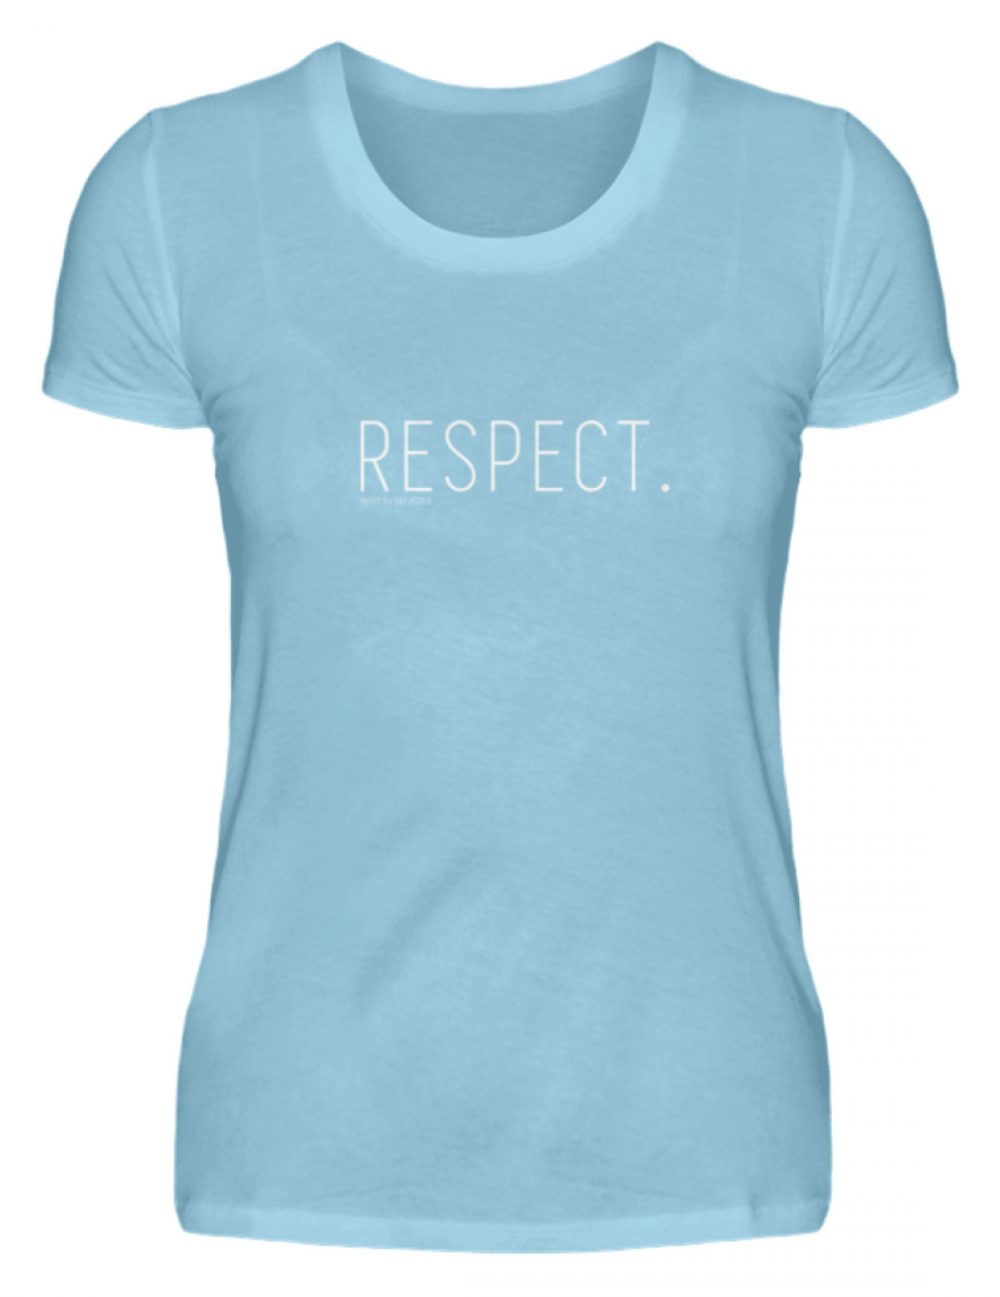 RESPECT. - Damen Premiumshirt-674